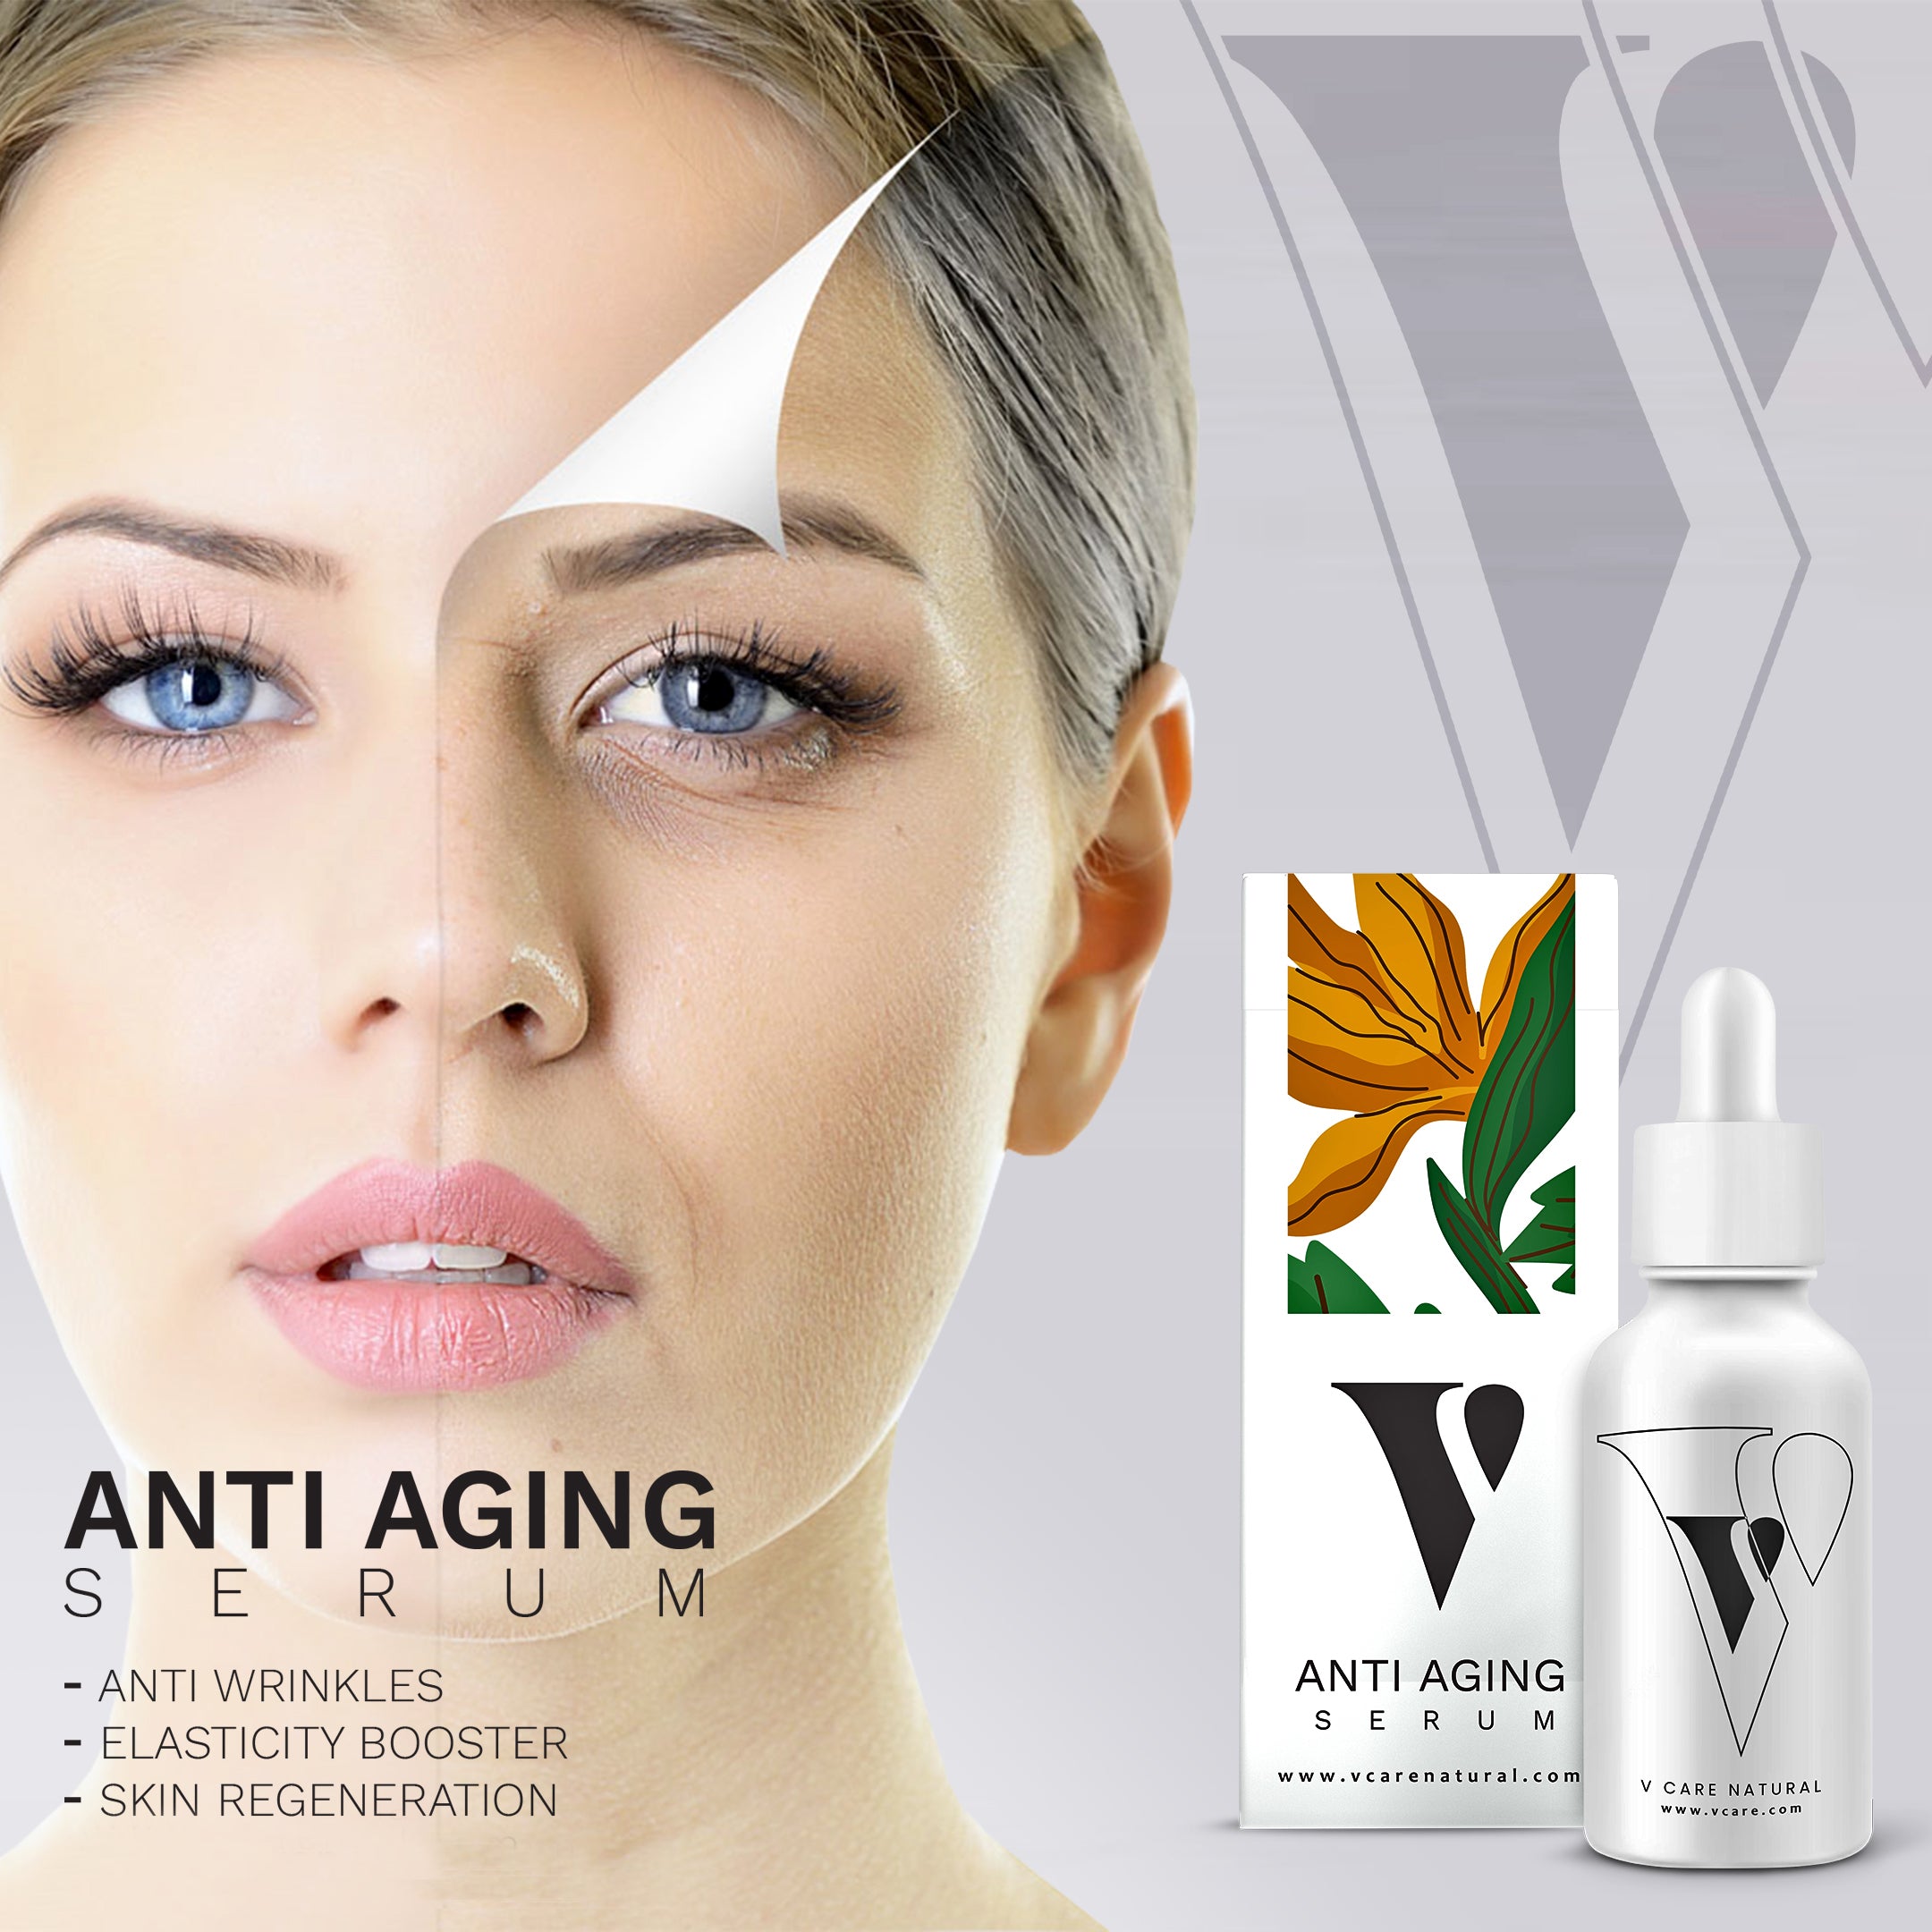 VCARE Natural Anti-Aging Serum - Vcare Natural